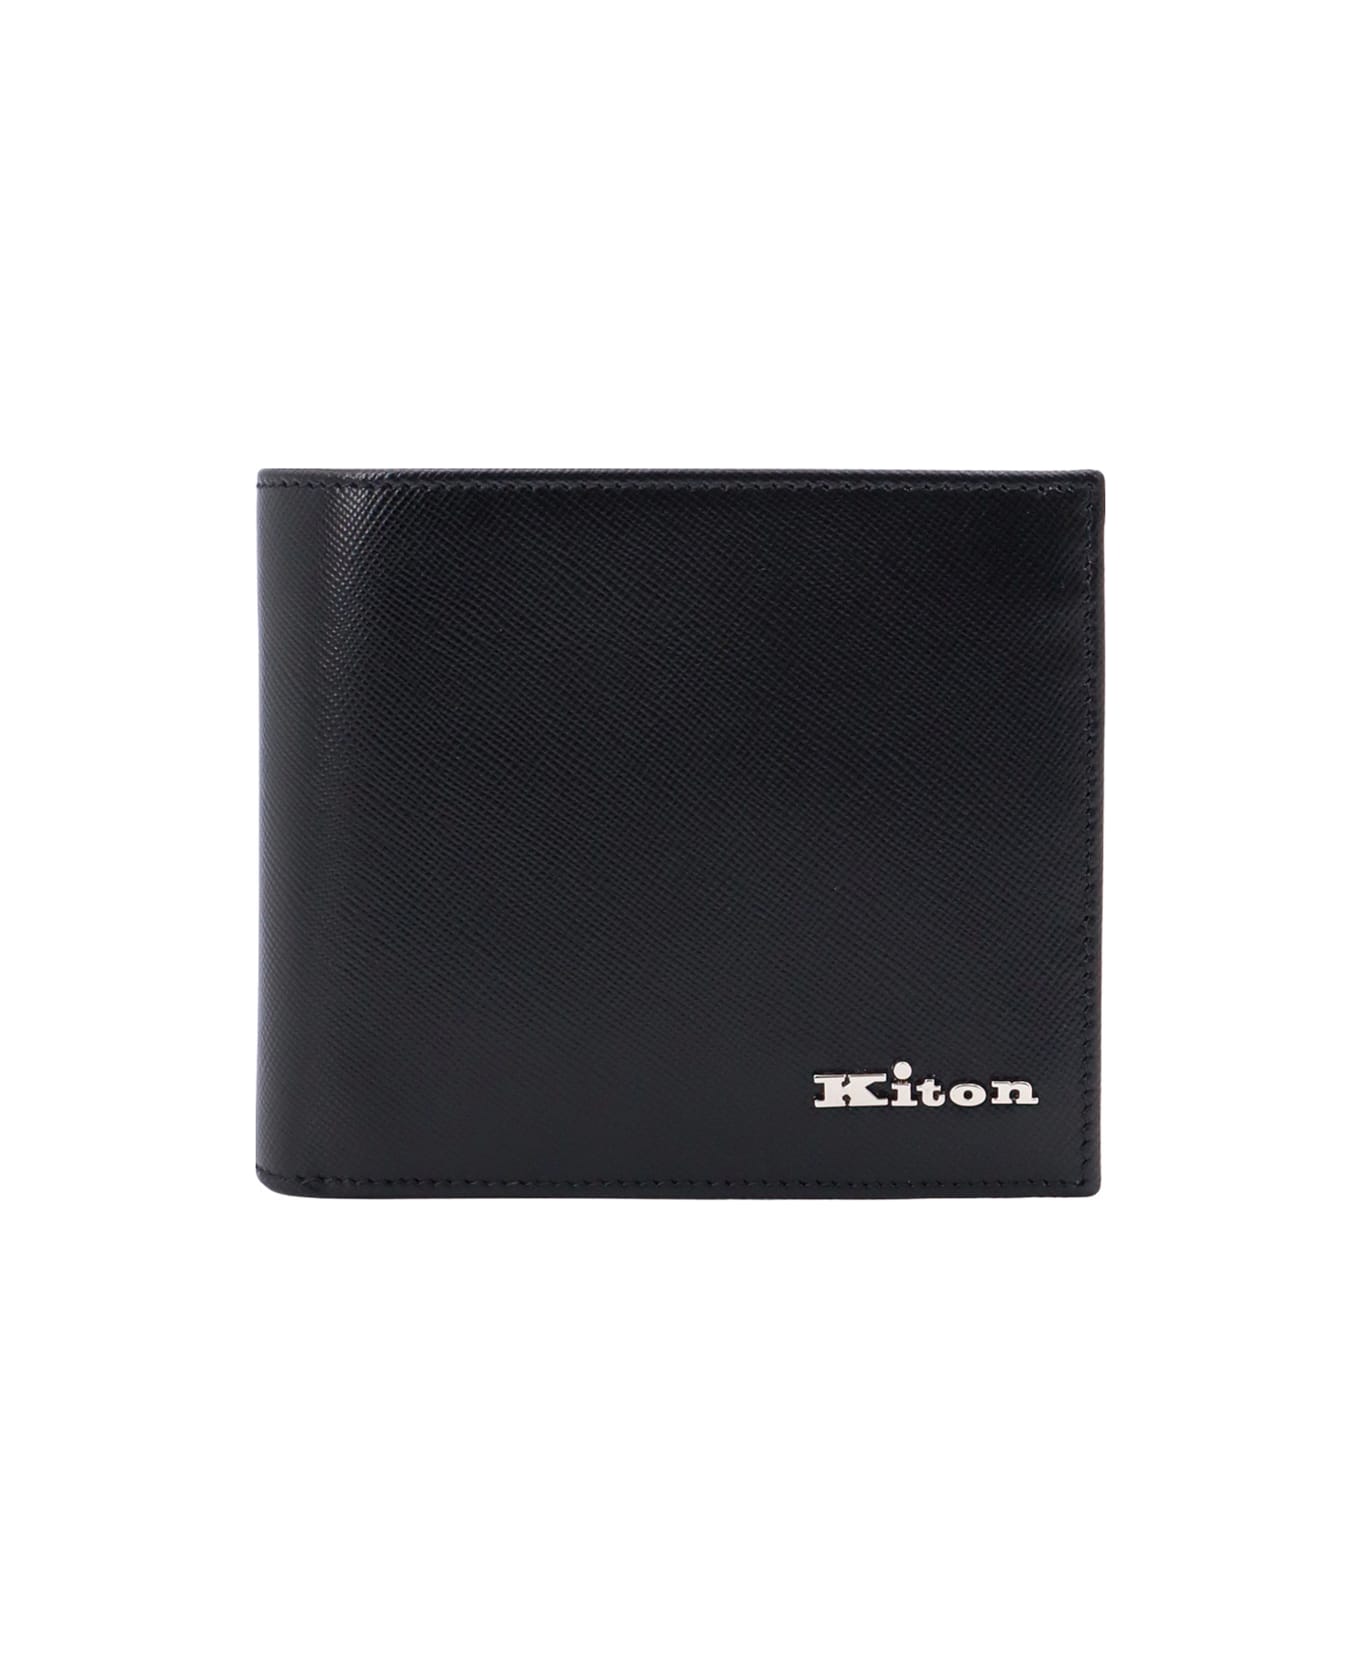 Kiton Wallet - Black